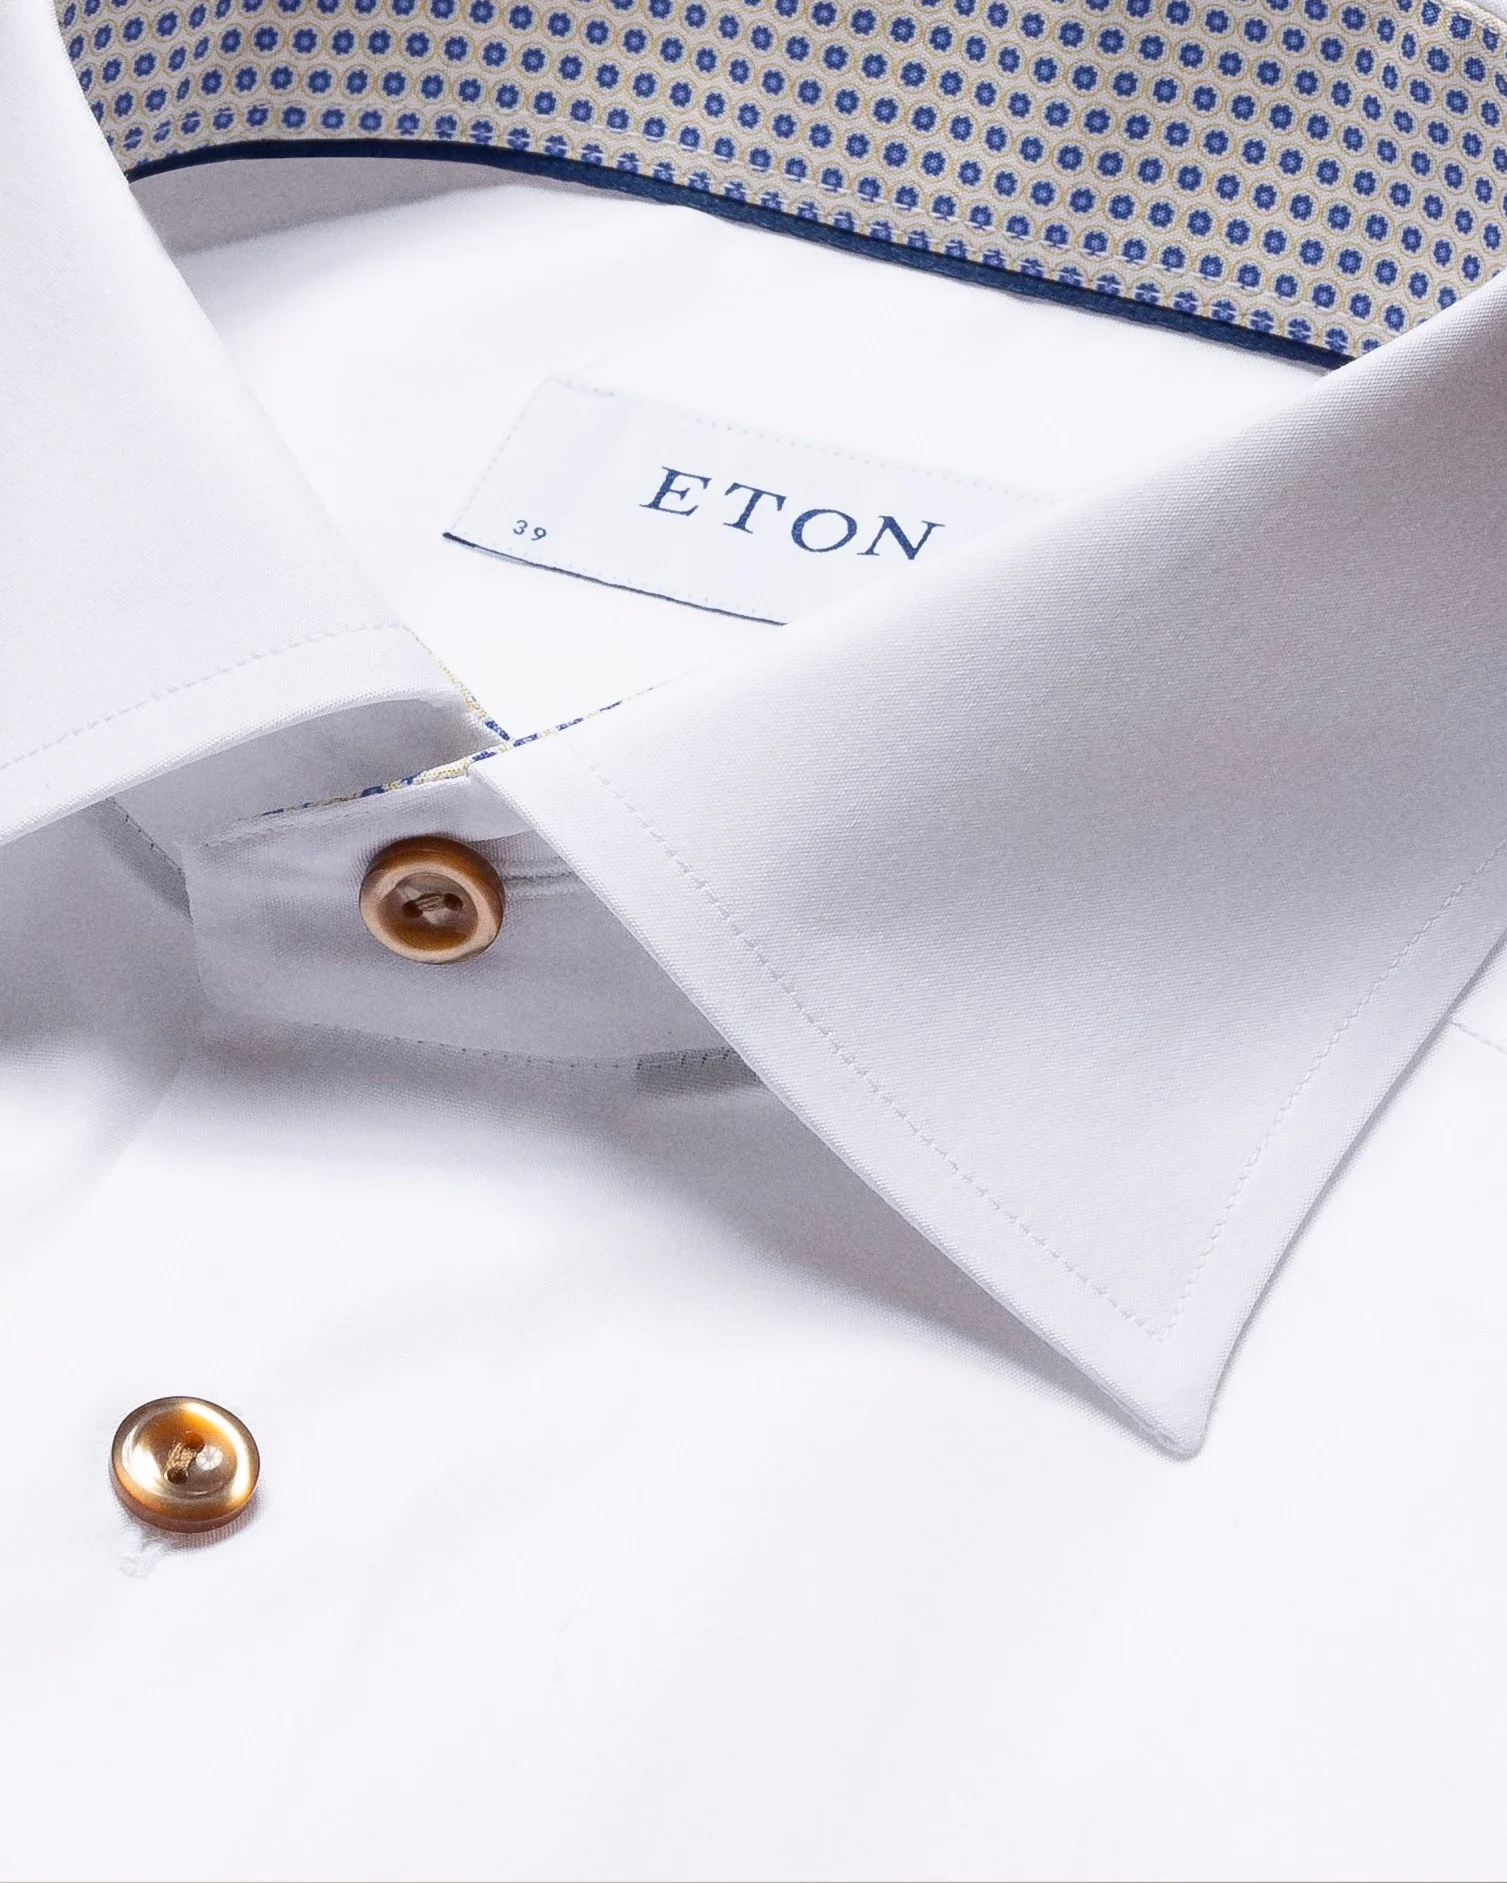 Eton - white poplin shirt glass print details cut away